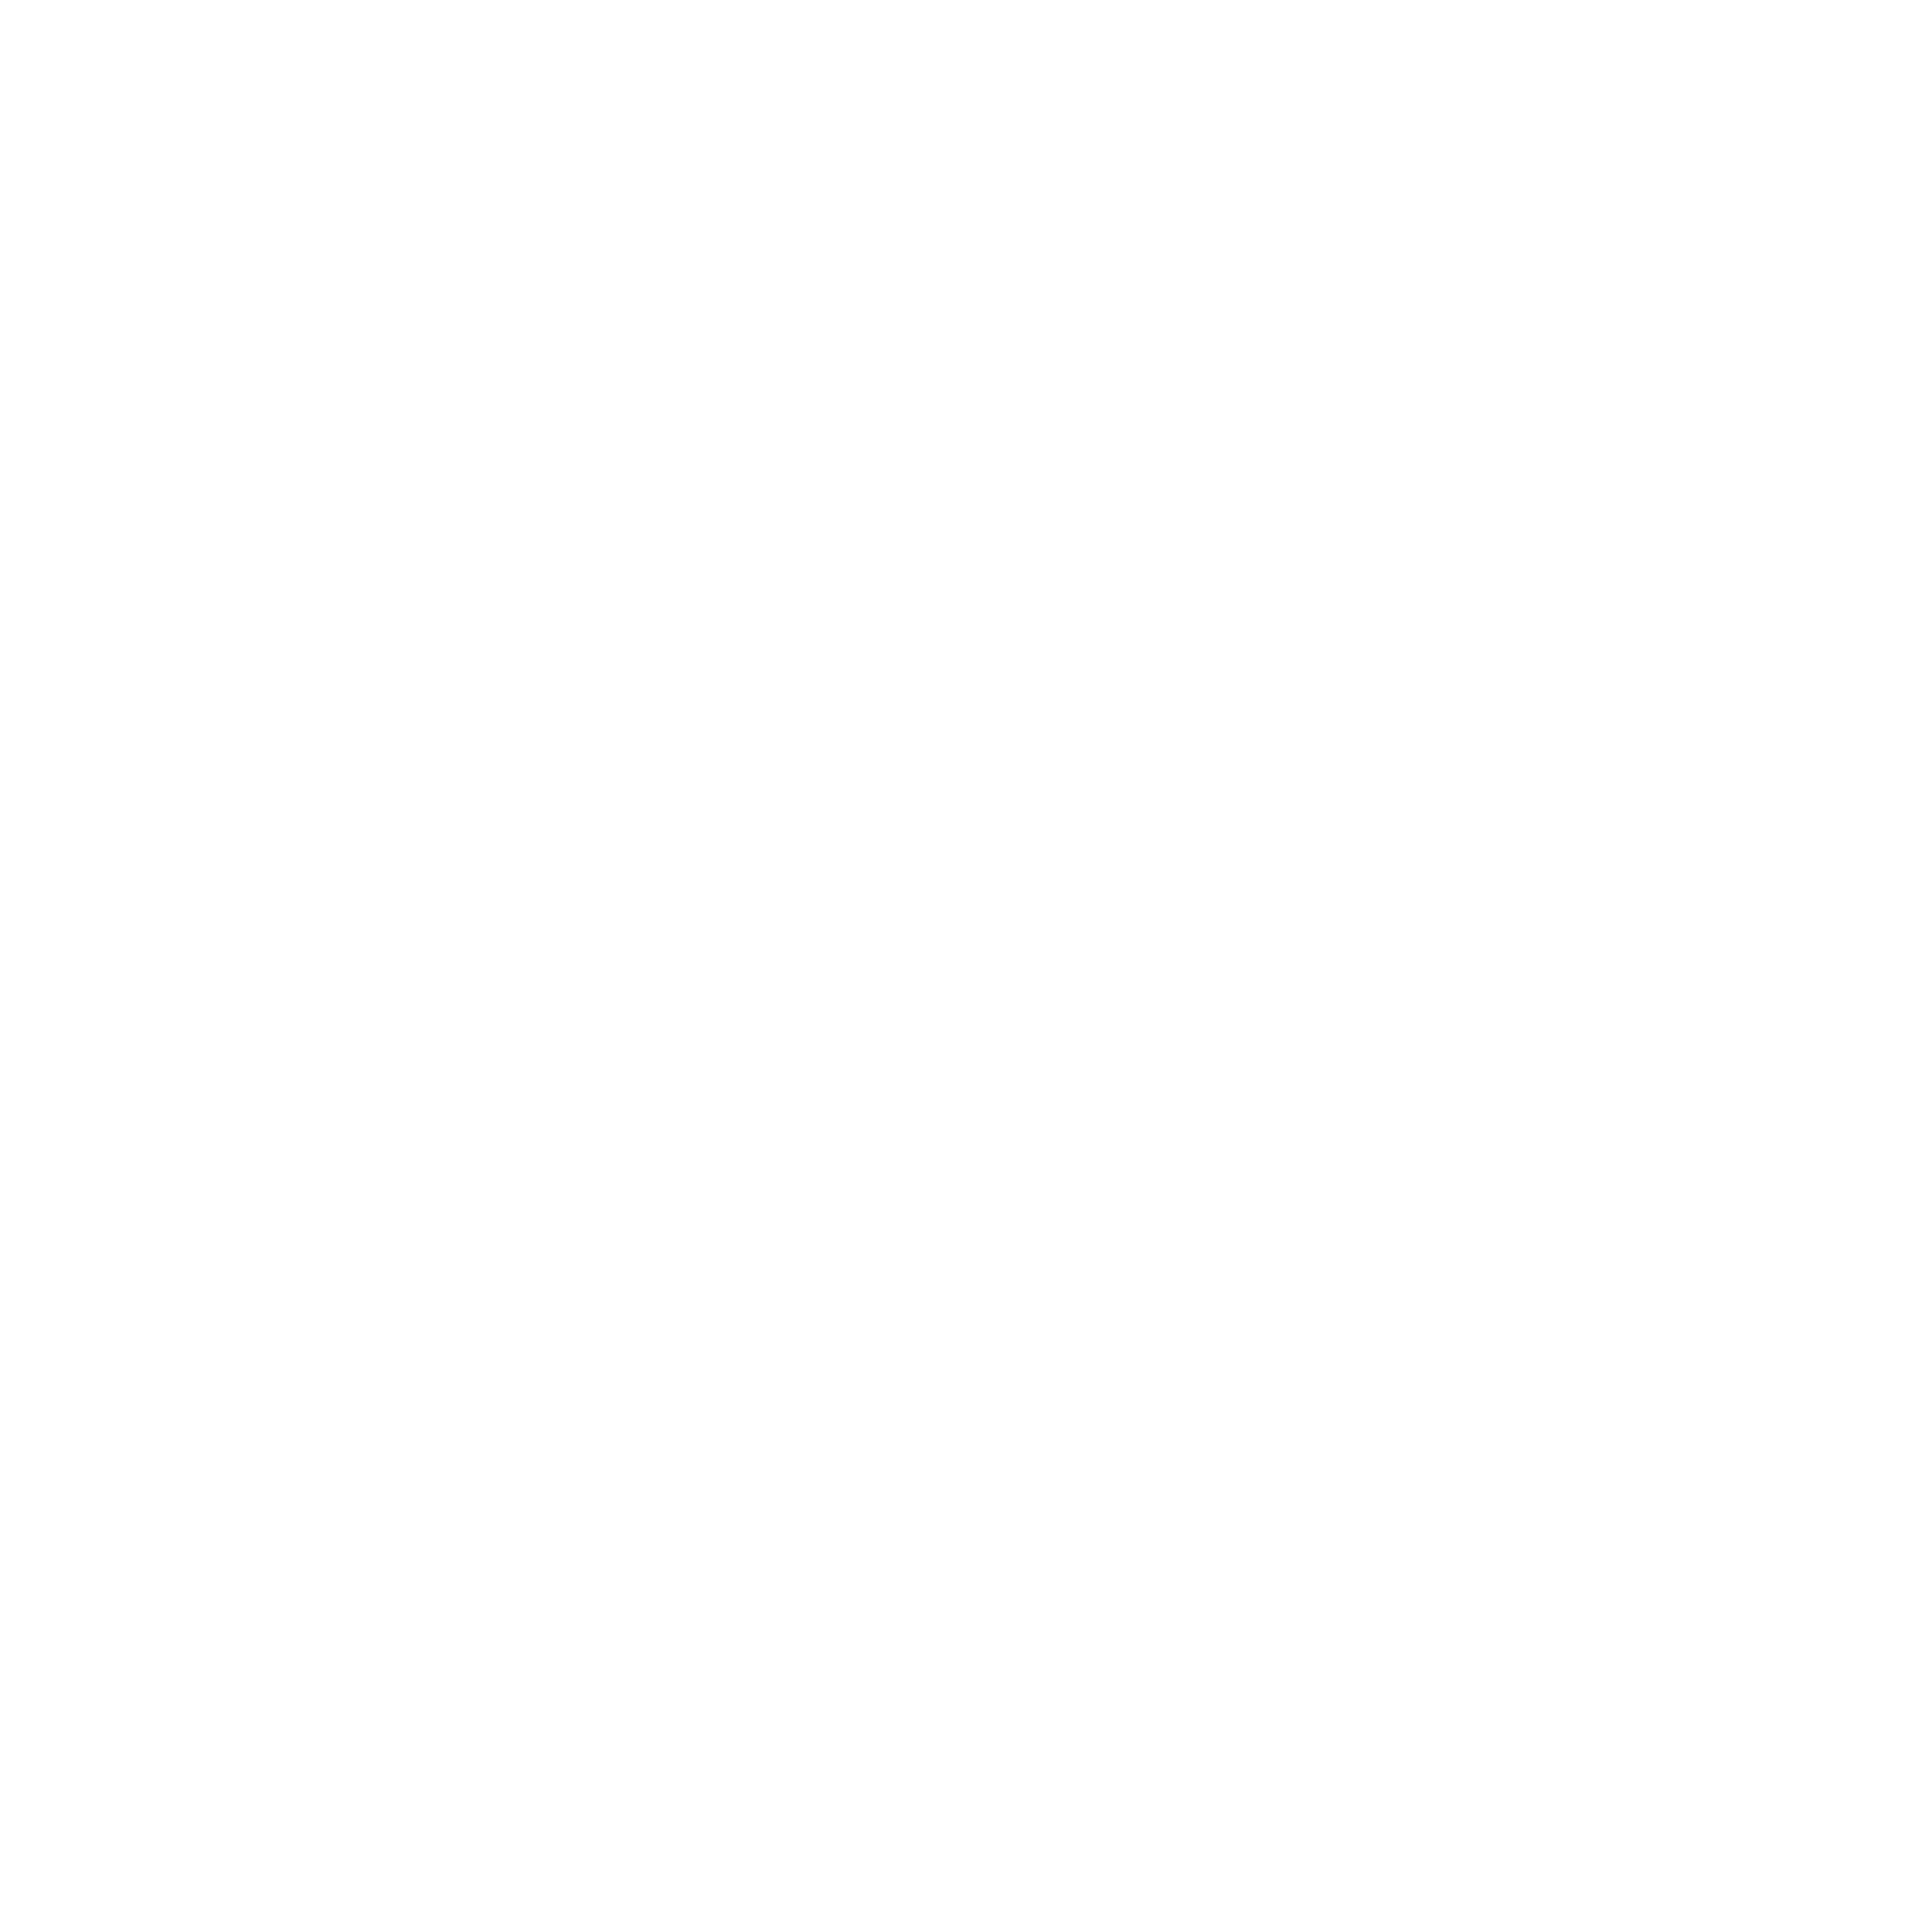 CBC Radio Canada Logo - CBC Radio Canada Logo PNG Transparent & SVG Vector - Freebie Supply